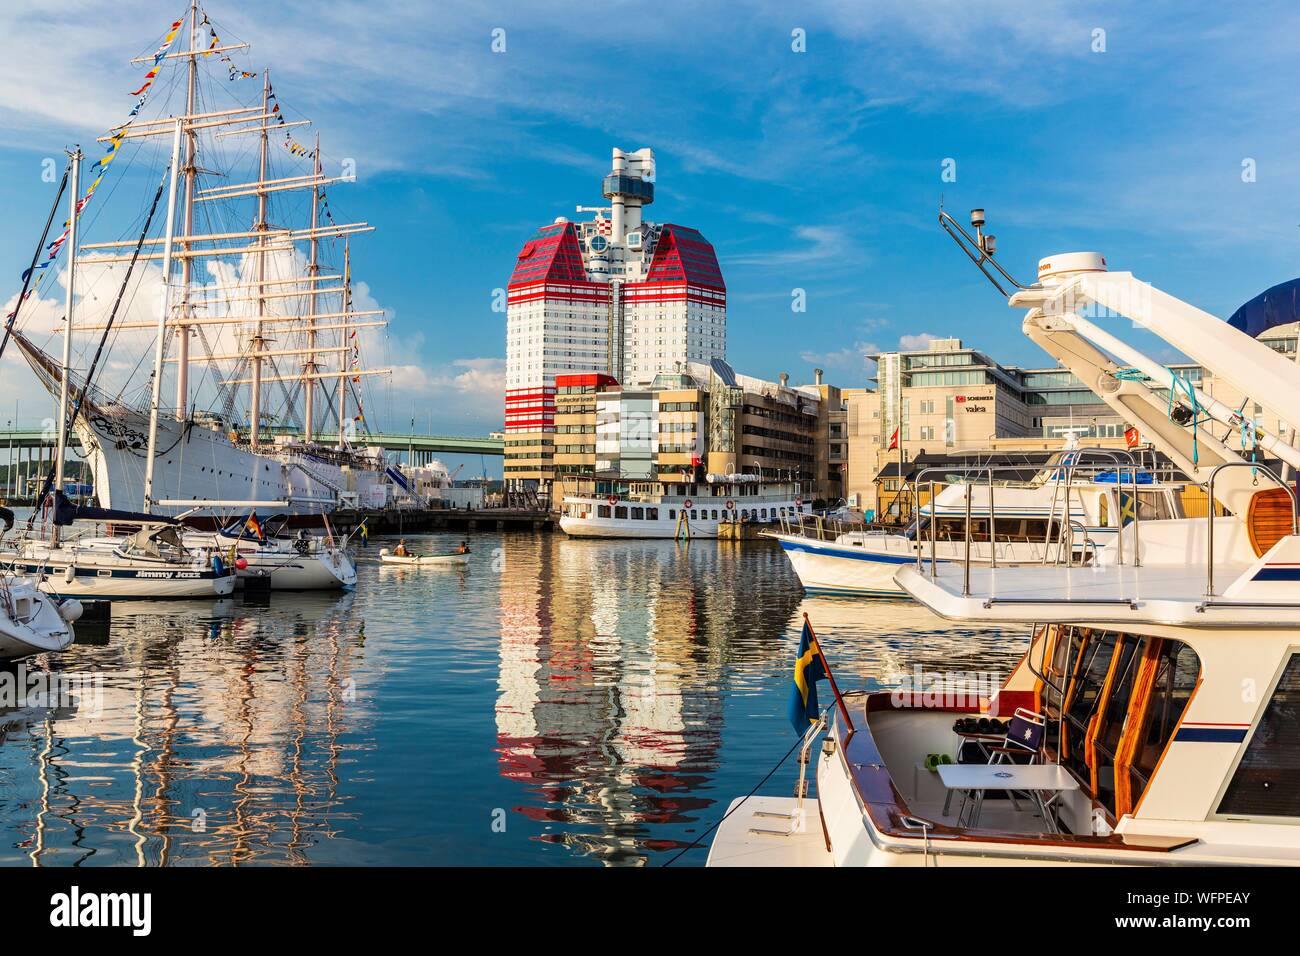 Sweden, Vastra Gotaland, Goteborg (Gothenburg), the skyscraper Gotheborgs-Utkiken and the sailing boat Viking in the port of Lilla bommen Stock Photo